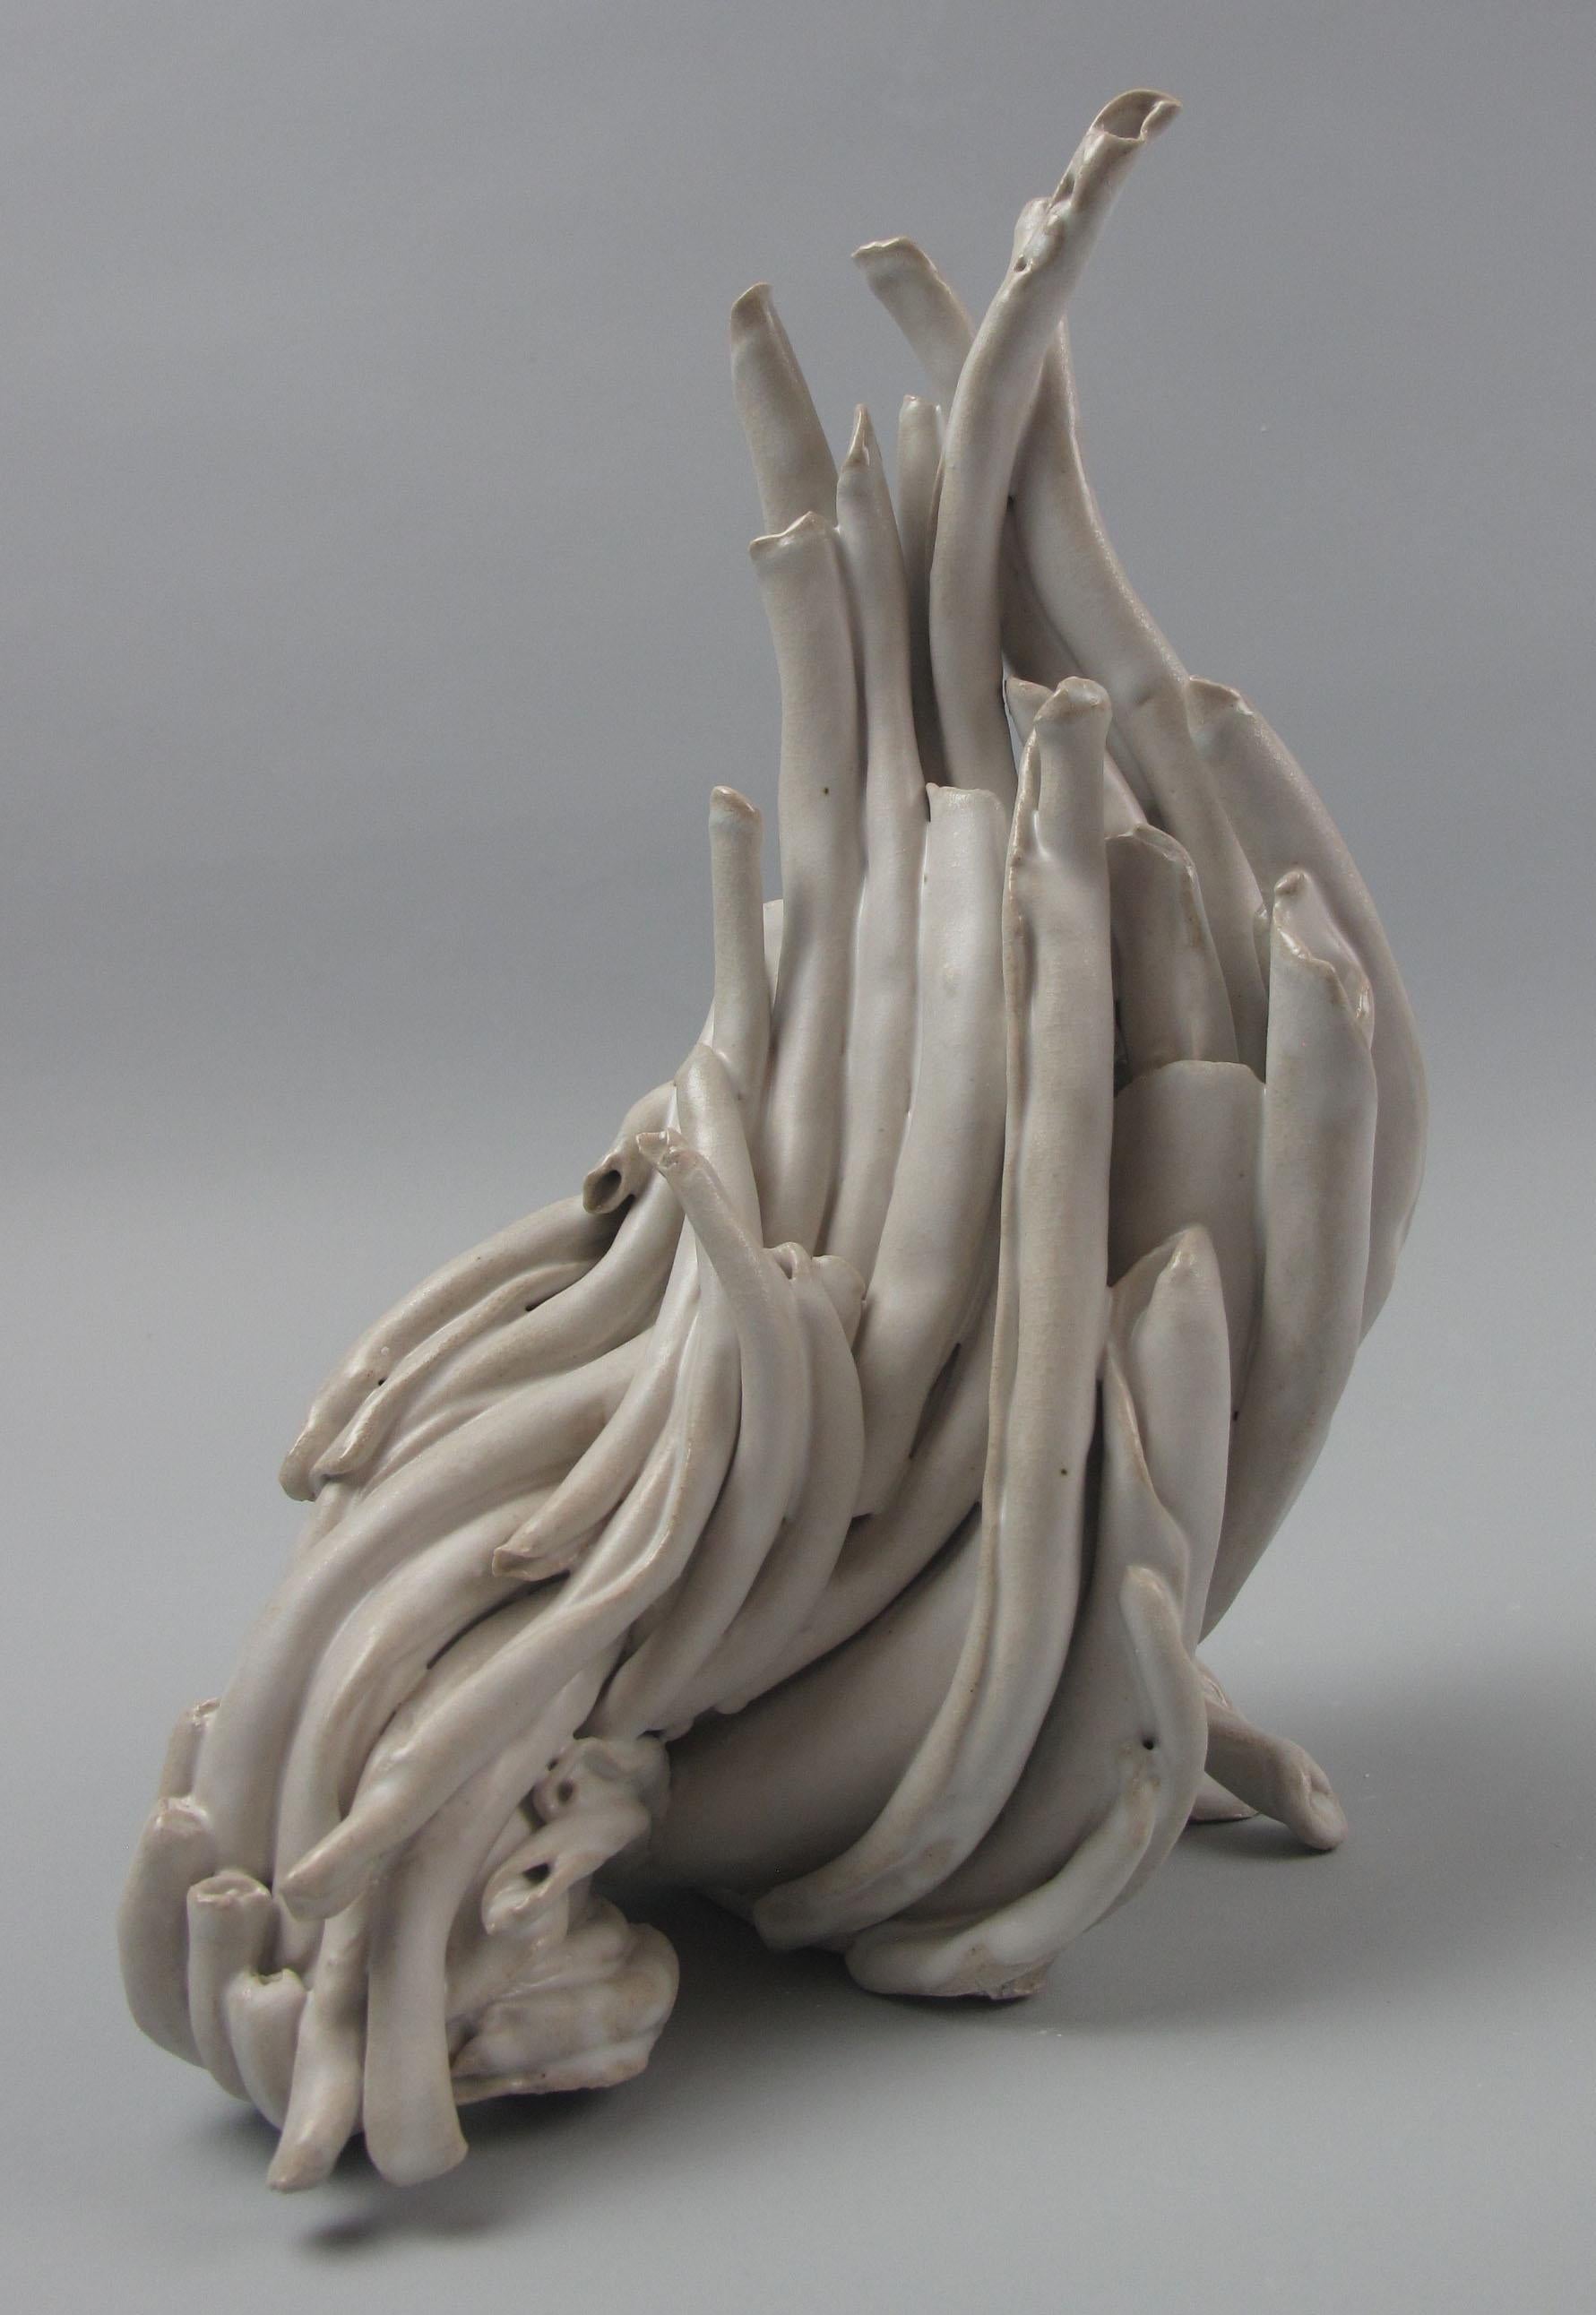 Abstract Sculpture Sara Fine-Wilson - « Turn », abstrait, gestuel, céramique, sculpture, crème, blanc, grès